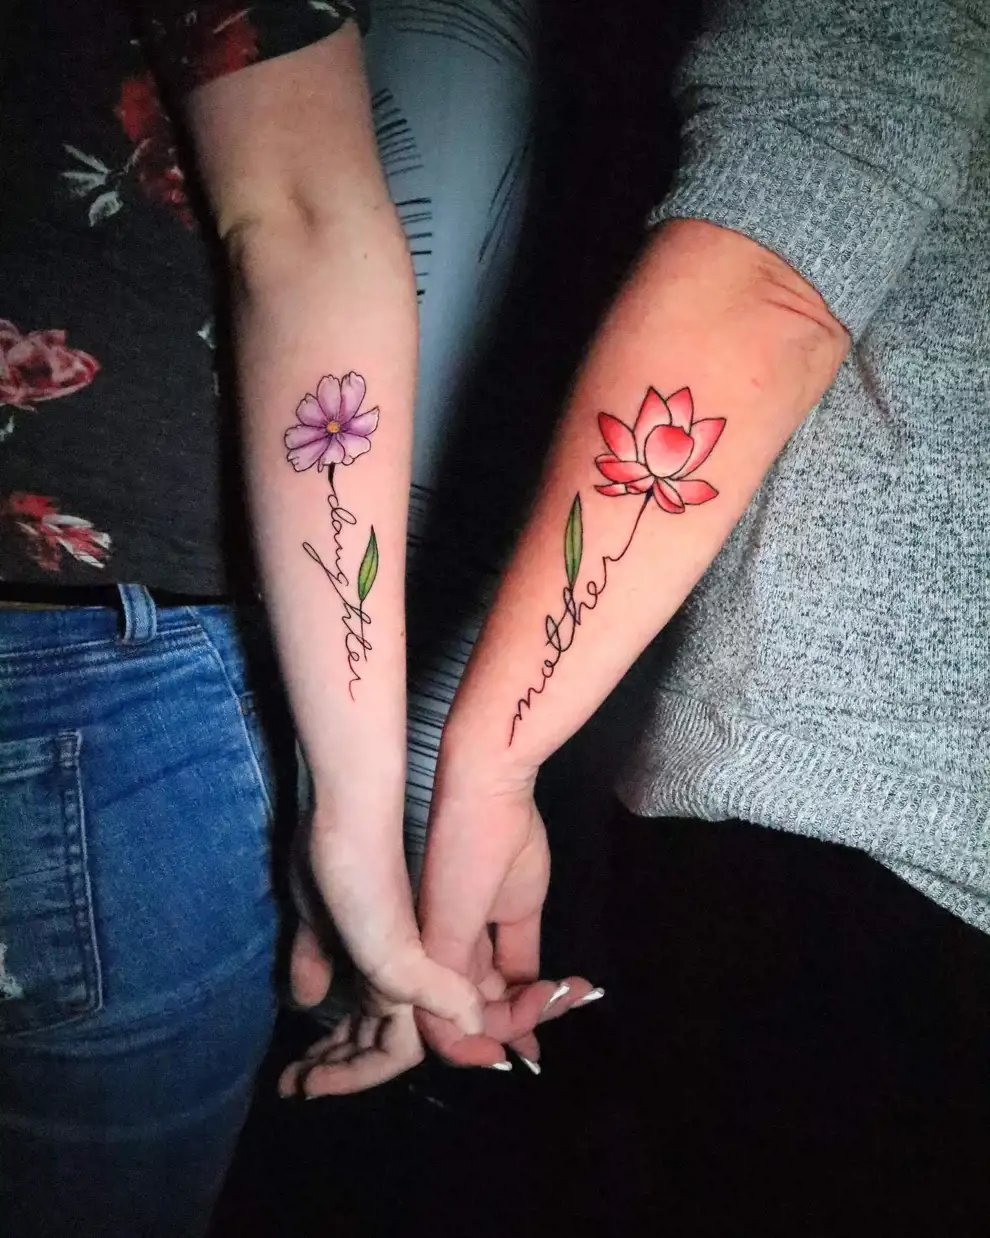 Tatuajes madre e hija: flores con nombres